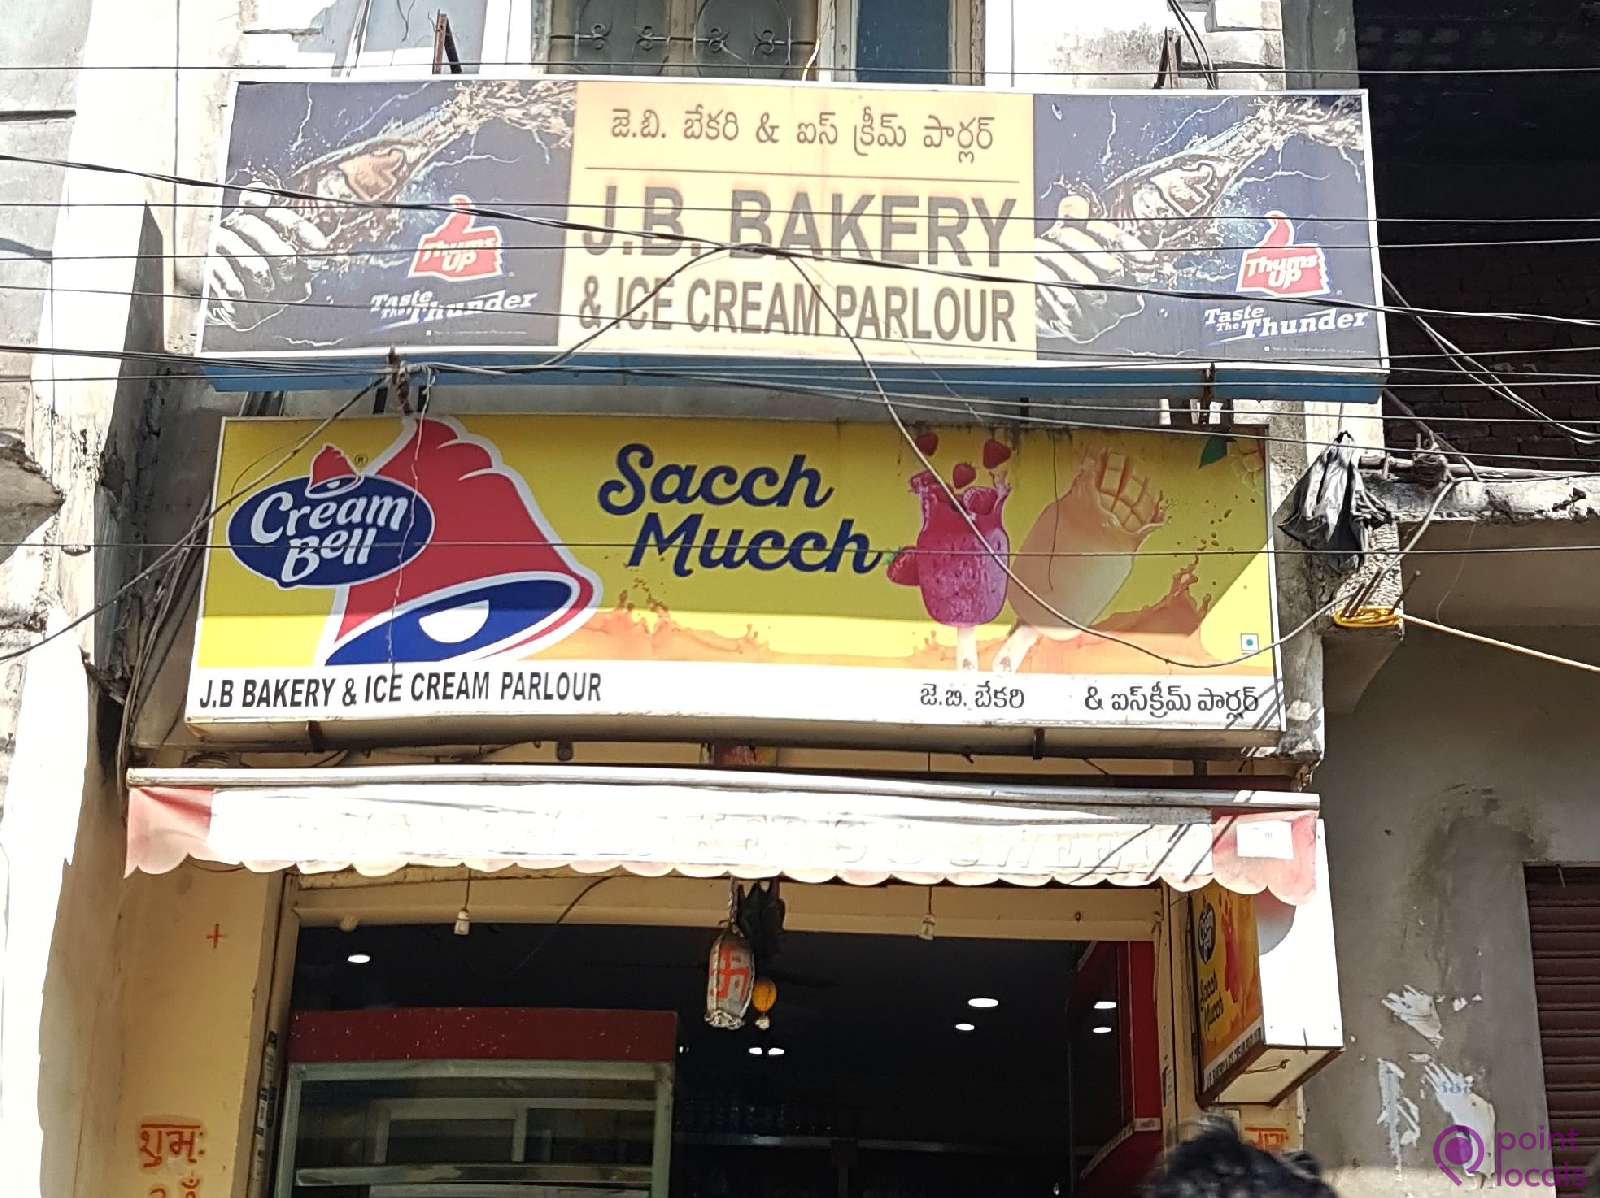 12 Best Bakery In Johor Bahru | JB Bakery Shop & Cafe List 2023